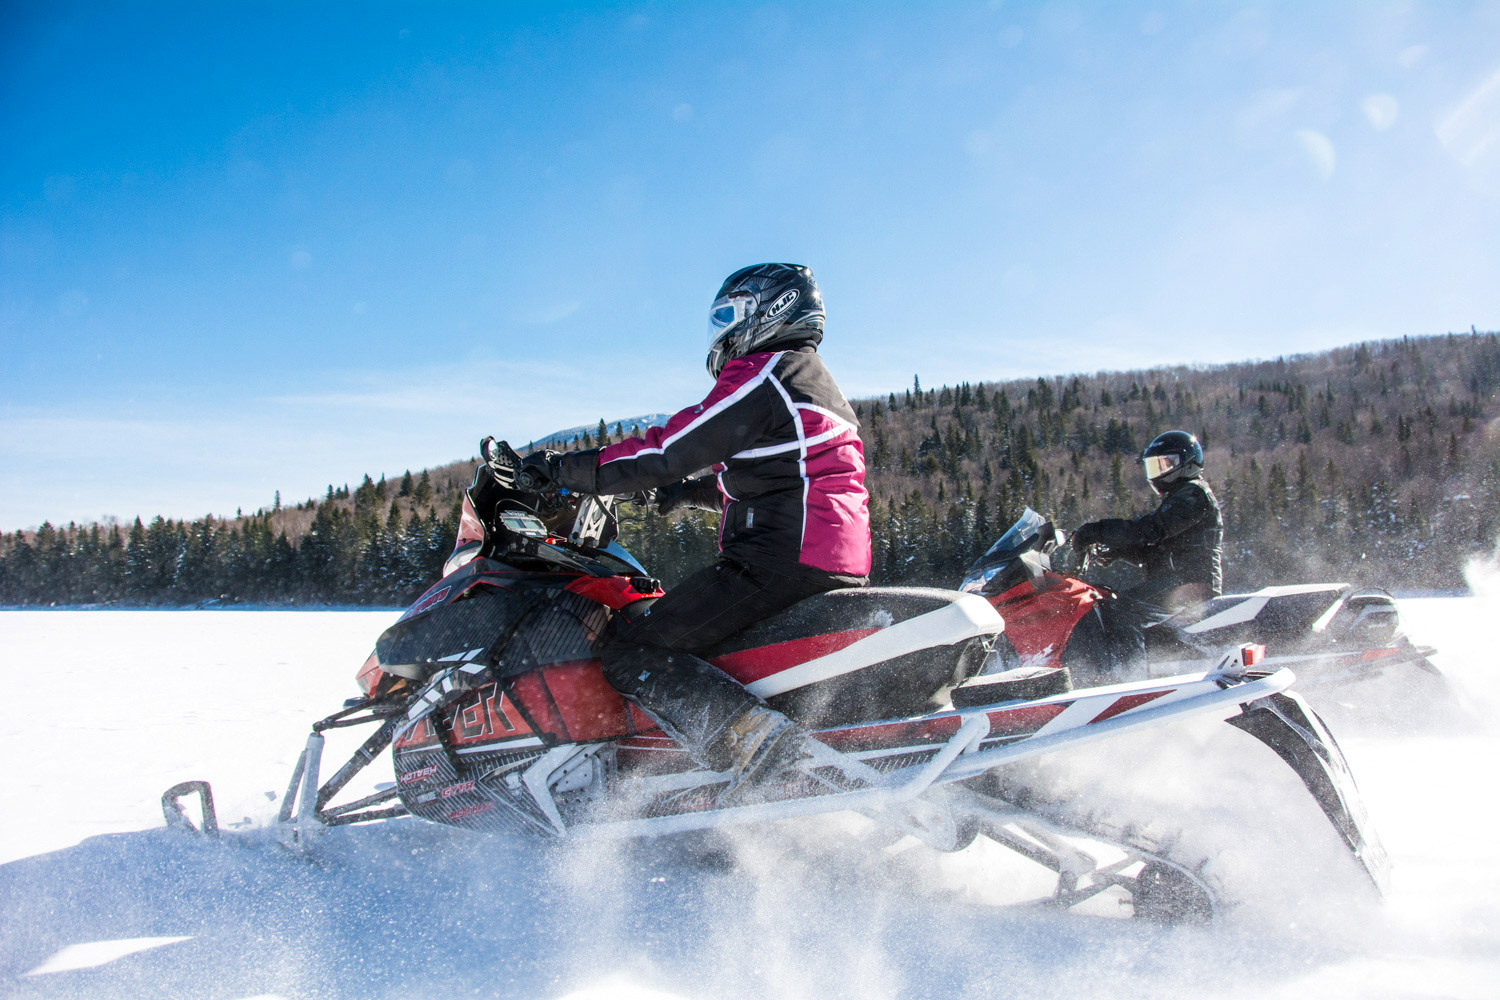 feb10-11 2015-Tourism New Brunswick-T4G Kick-winter 2015-New Brunswick Great Northern Odyssey-snowmobile trip-Mount Carleton-NB-photo by Aaron McKenzie Fraser-www.amfraser.com-_AMF4697.jpg